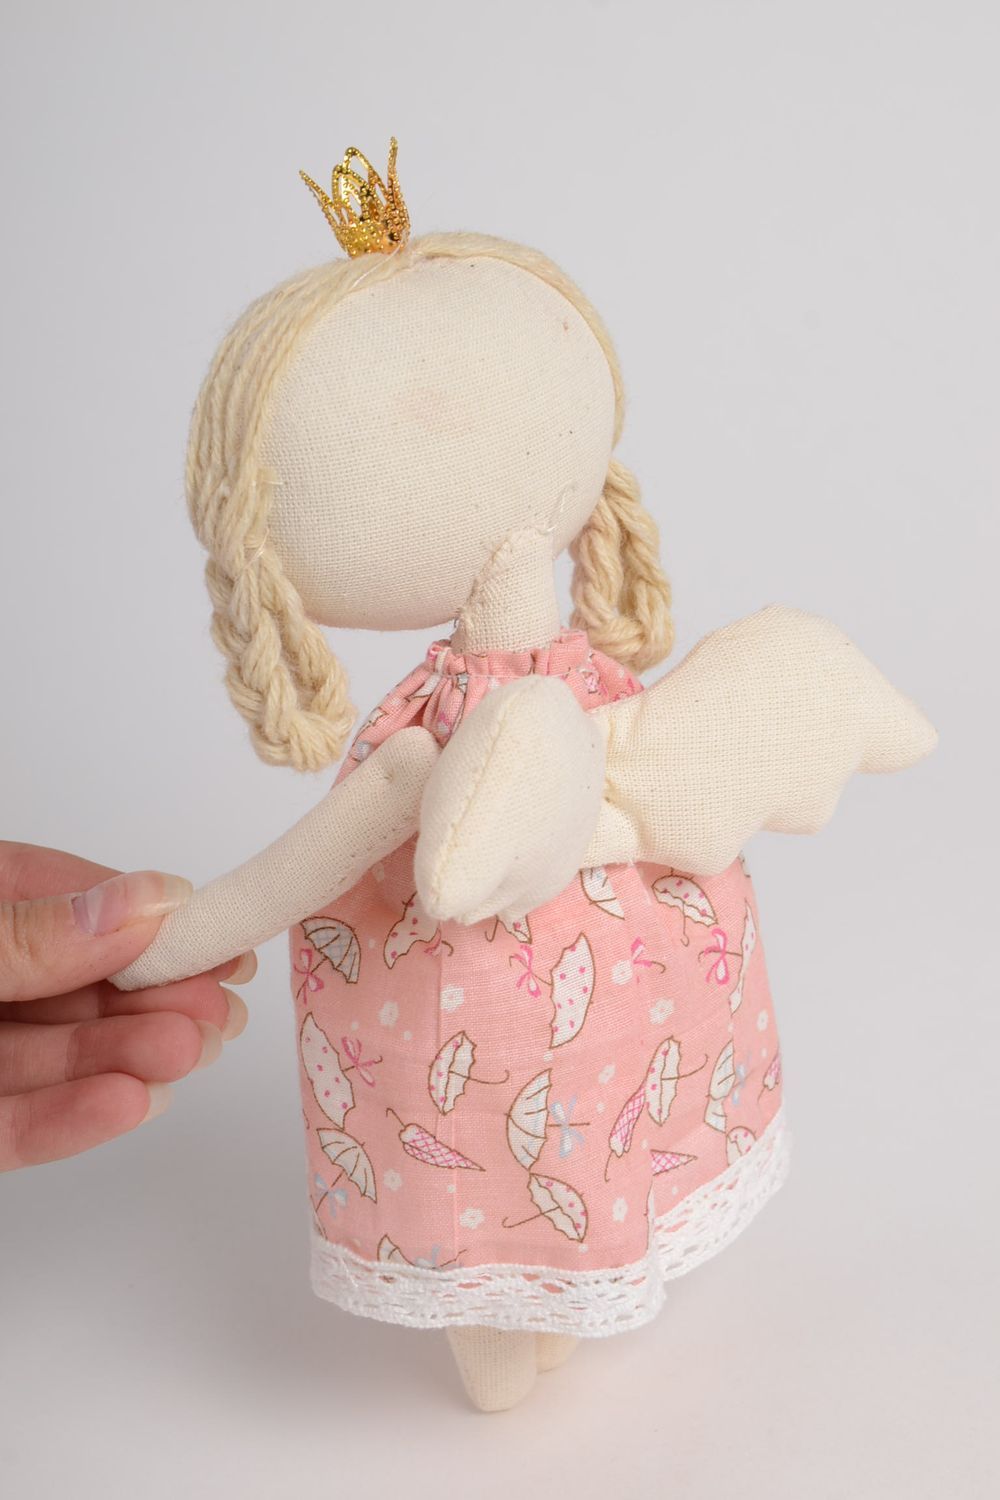 Handmade doll unusual doll for girls gift ideas nursery decor fabric doll photo 4